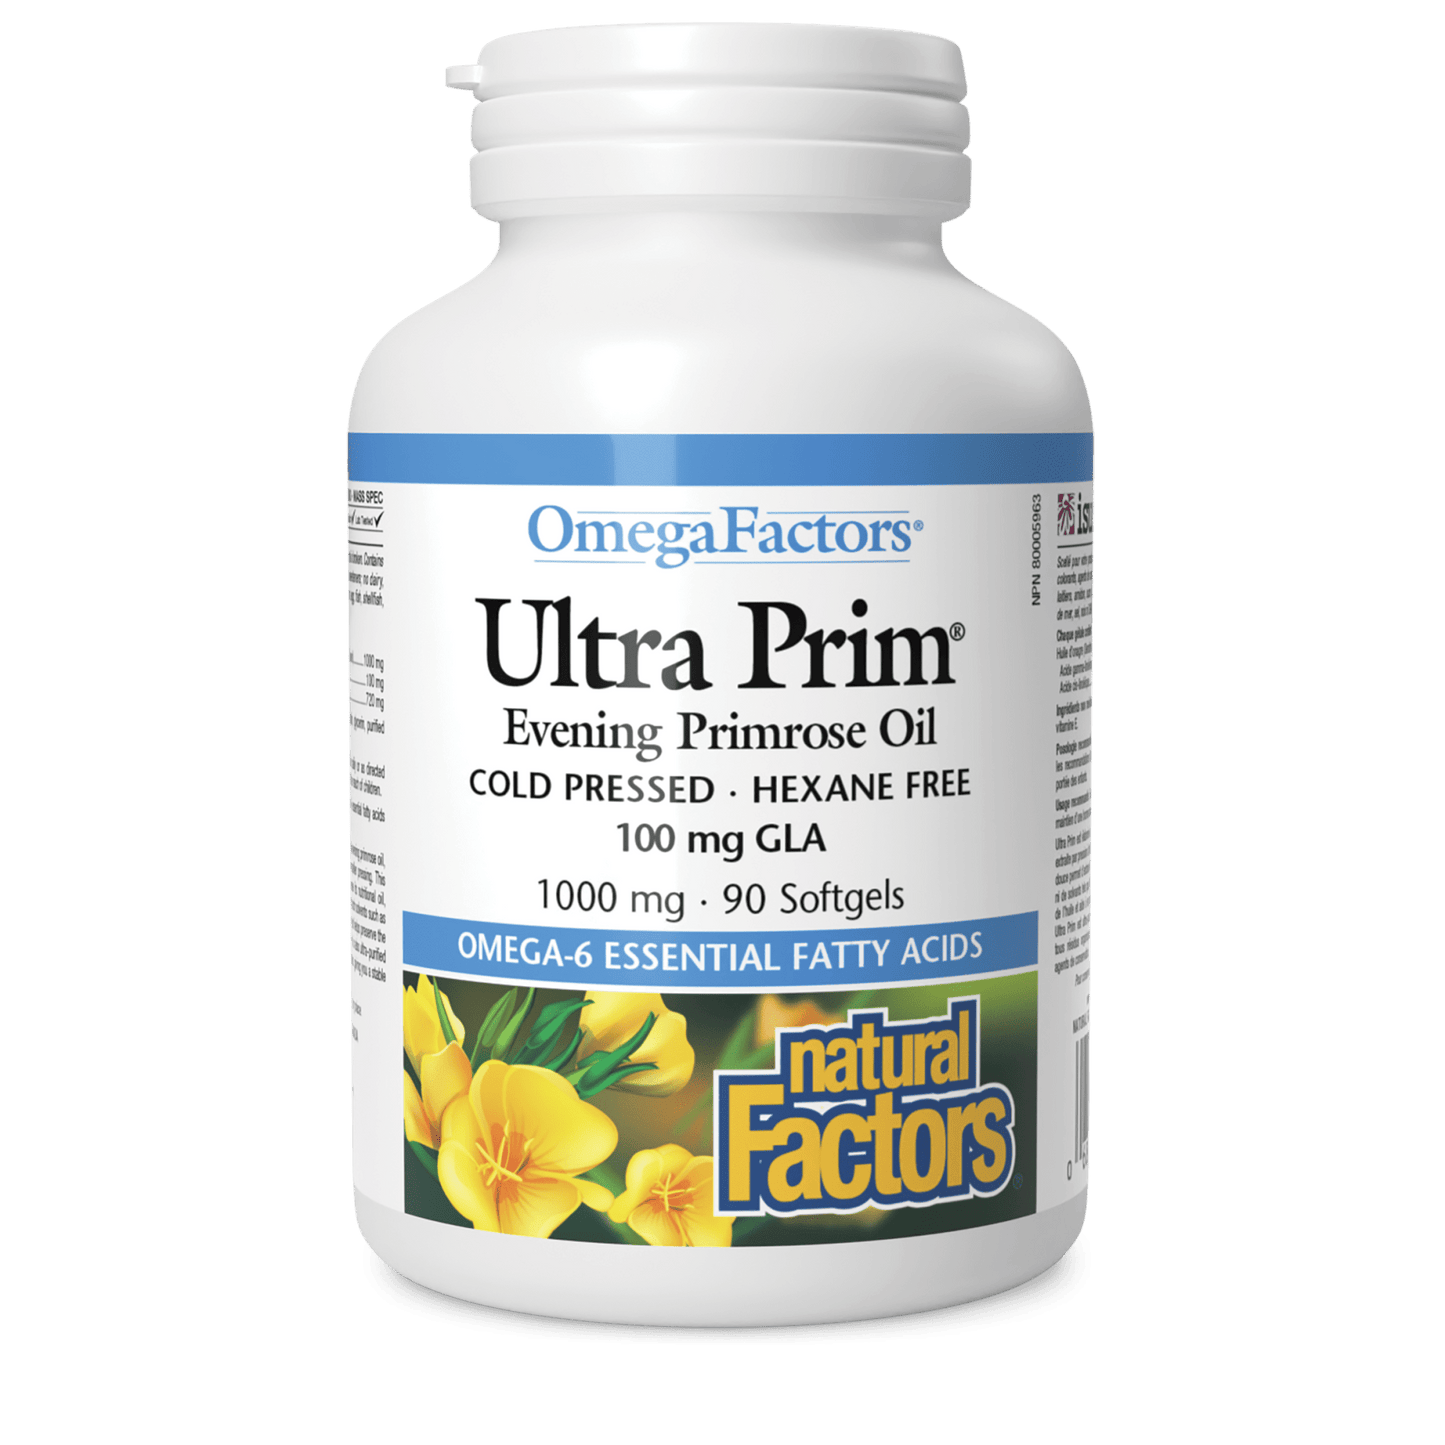 Ultra Prim Evening Primrose Oil 1000 mg, OmegaFactors, Natural Factors|v|image|2346